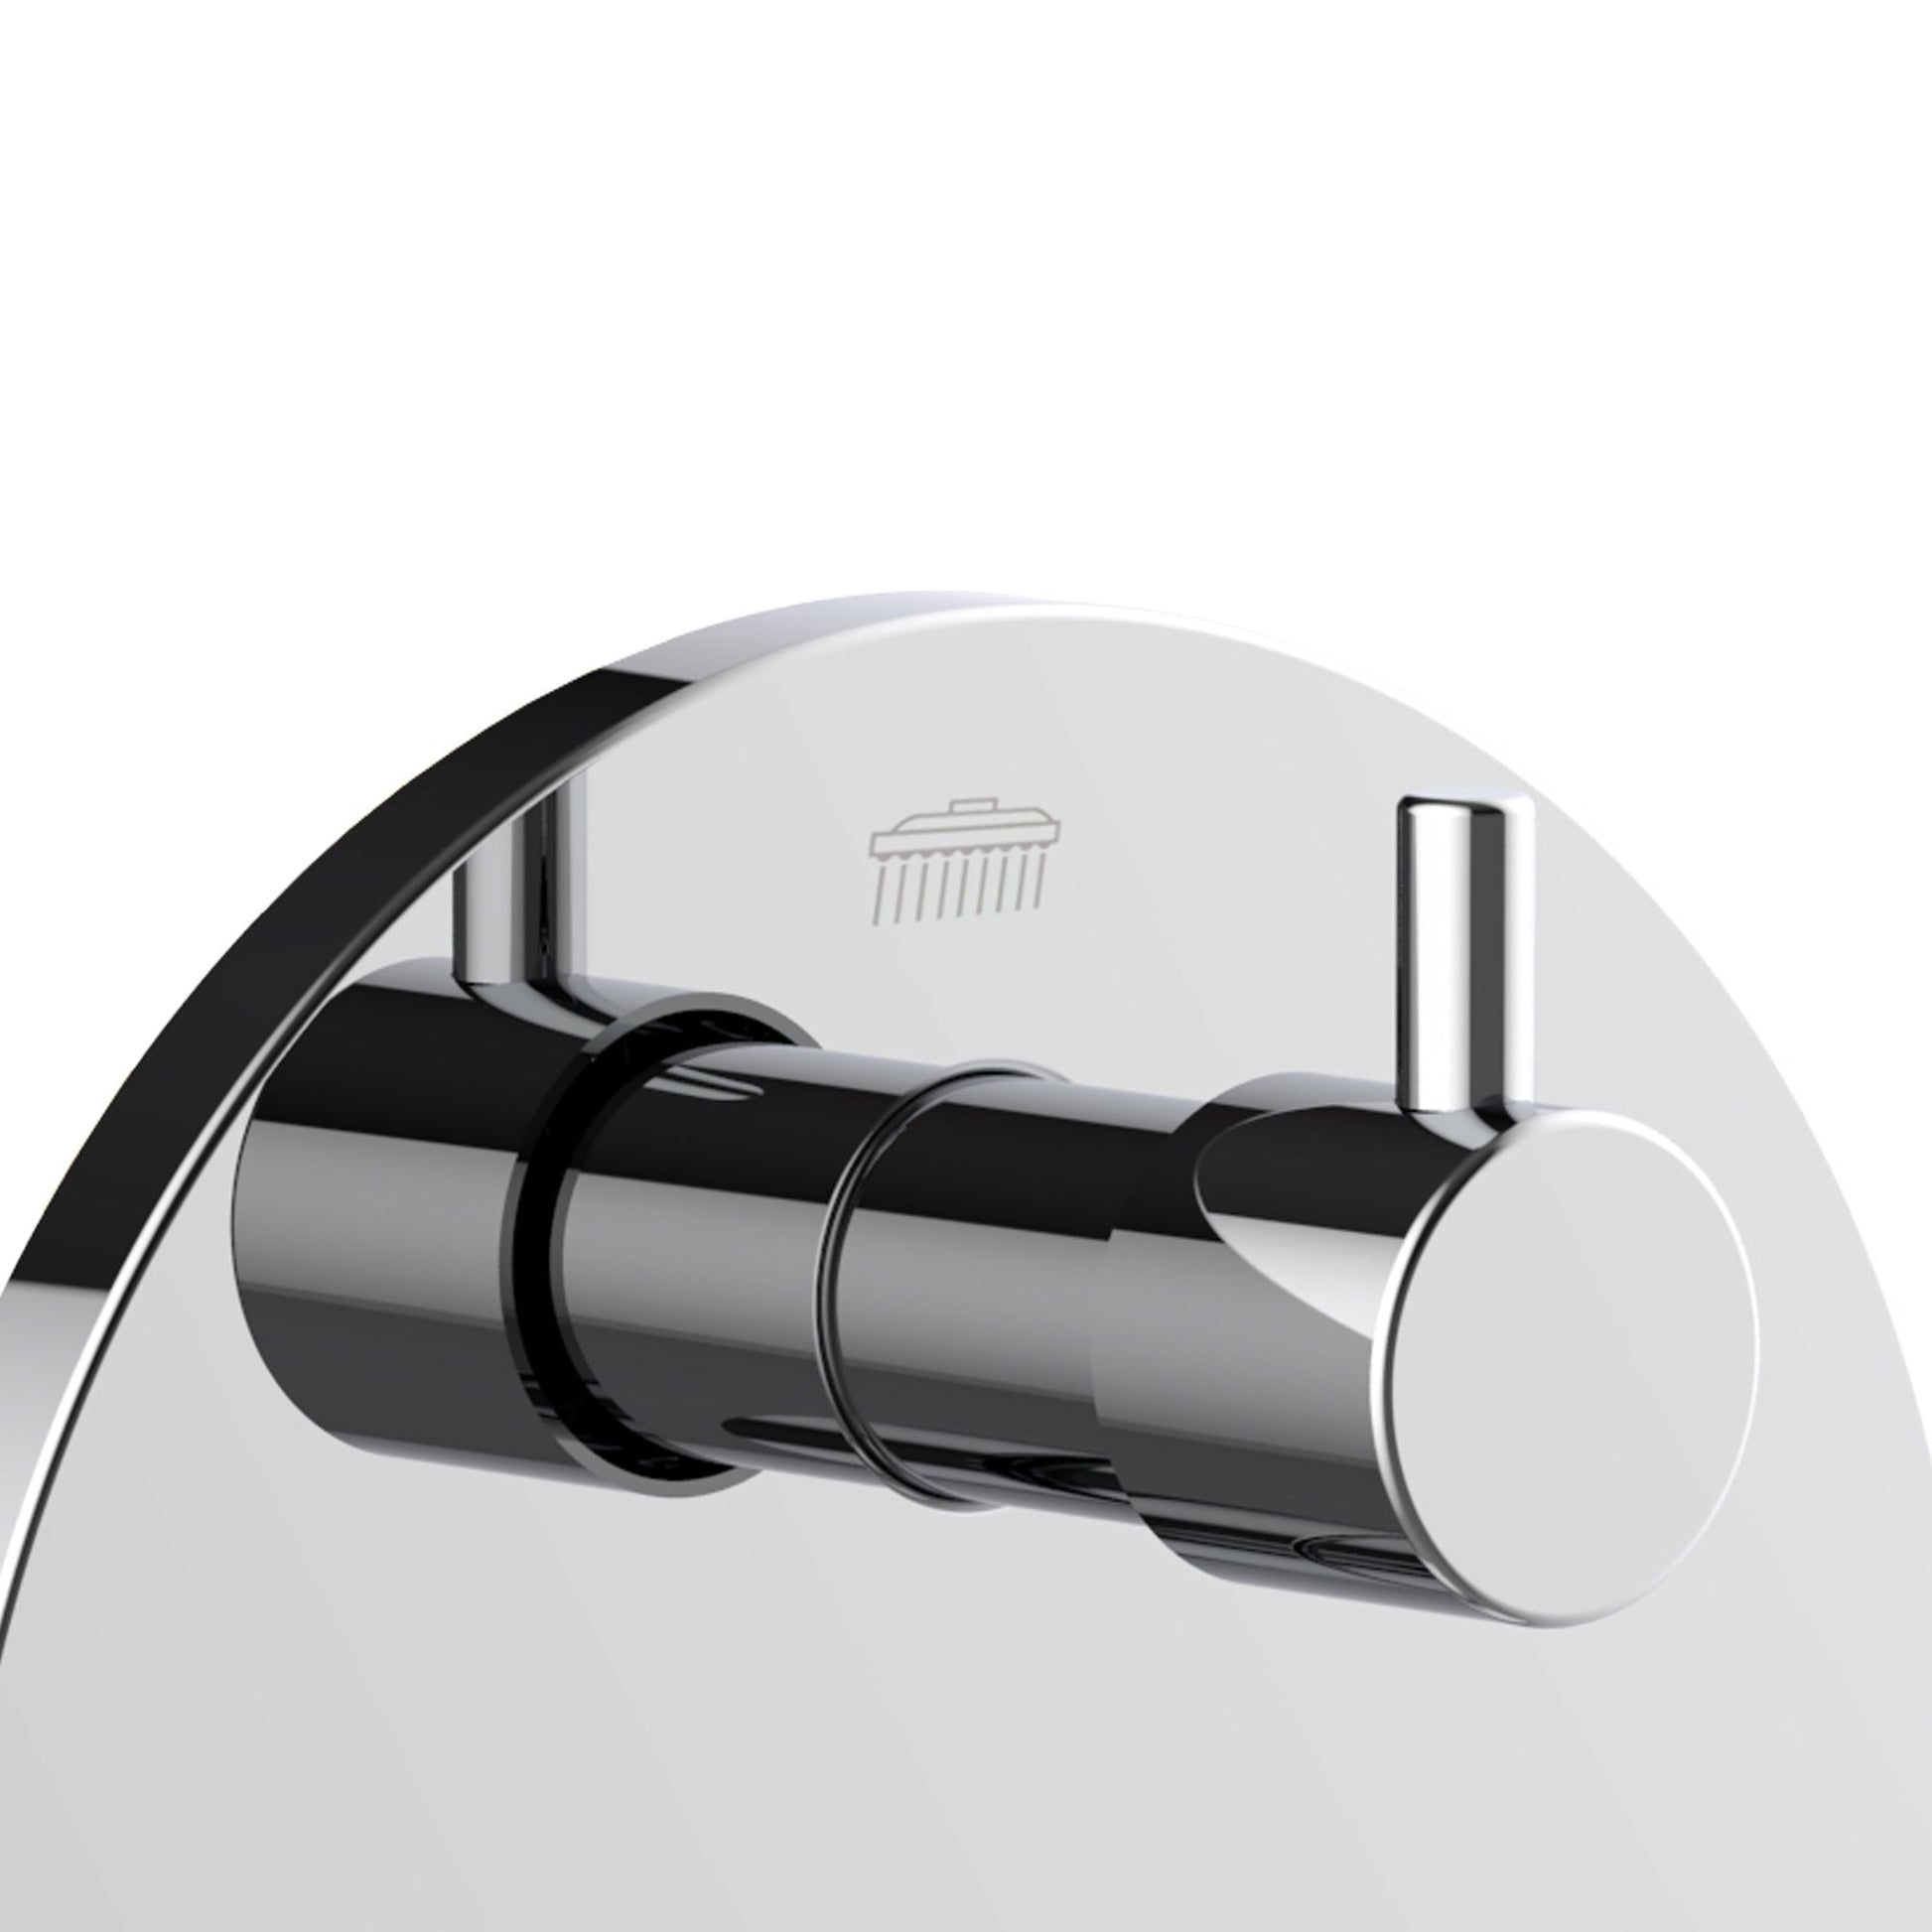 PULSE ShowerSpas Two Way Tru-Temp Pressure Balance 1/2" Rough-In Valve Chrome Finish Trim Kit